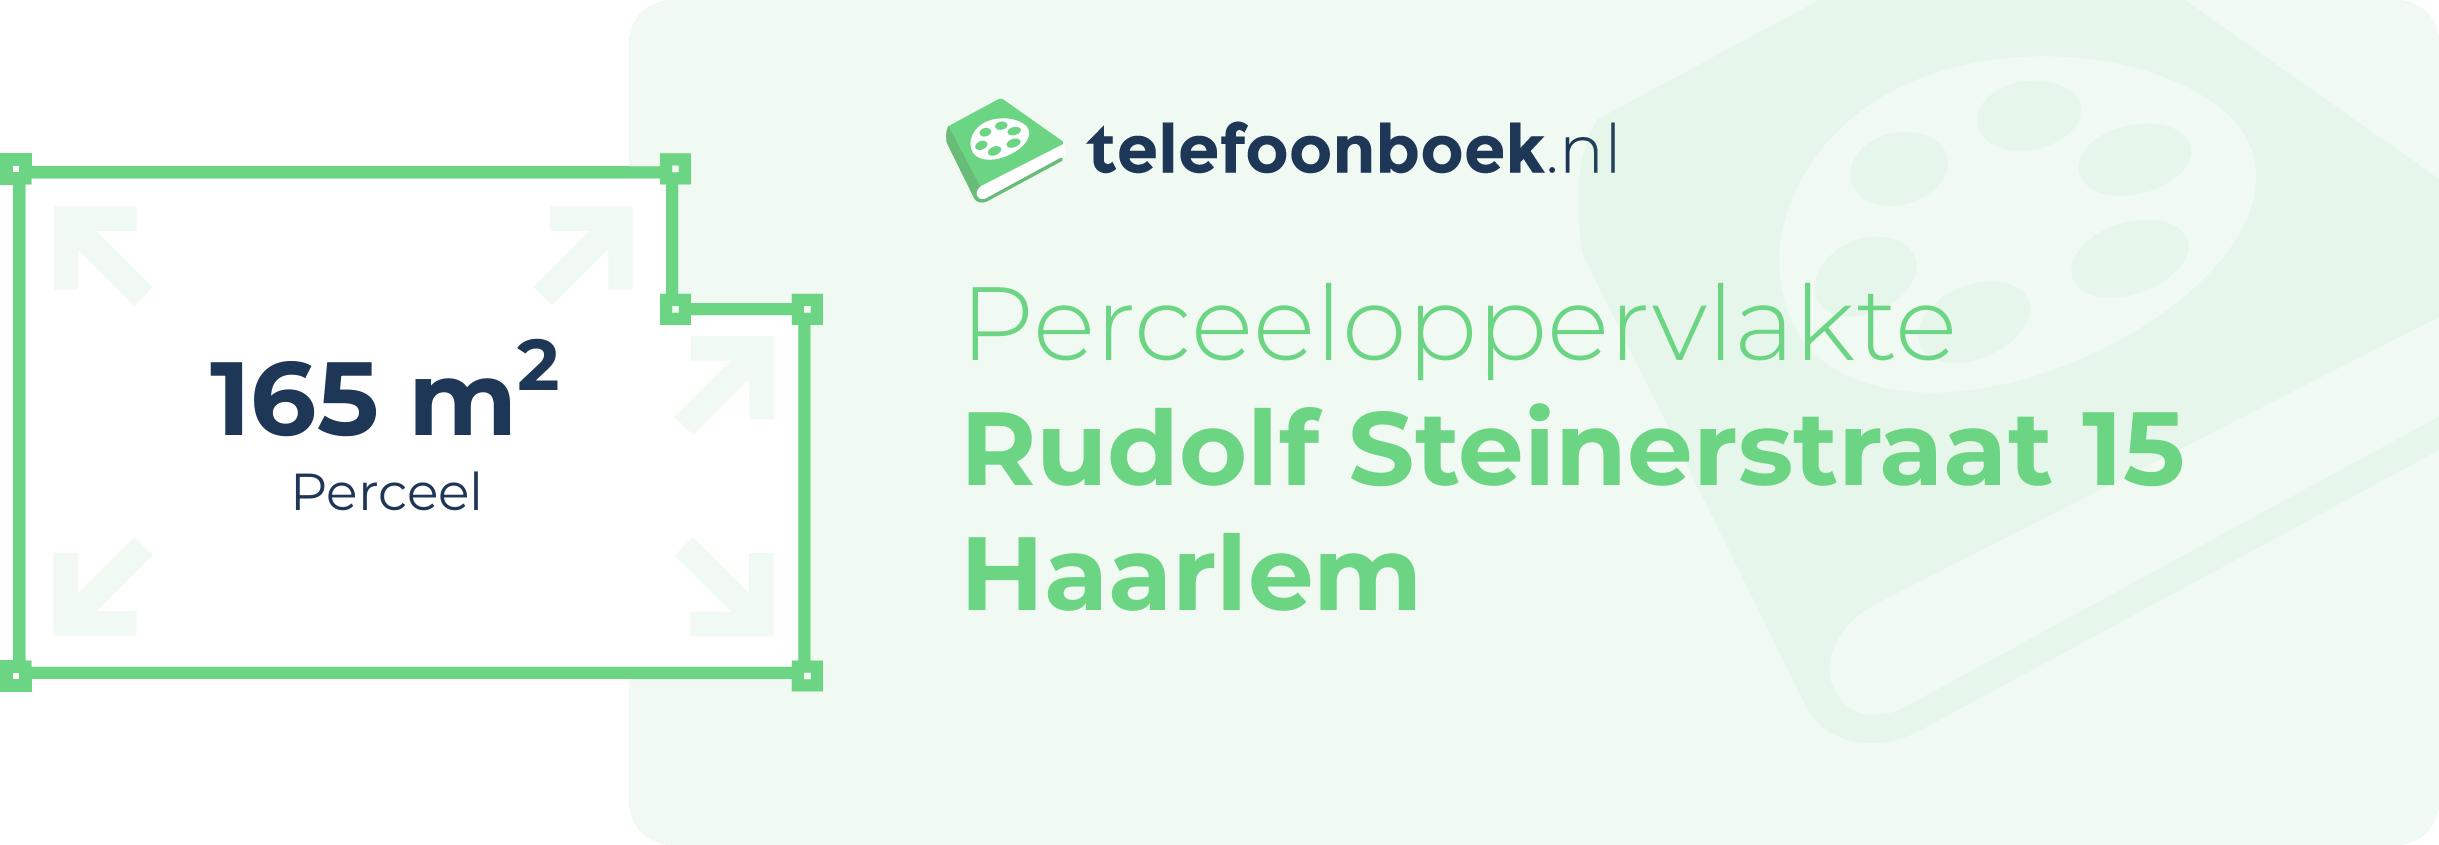 Perceeloppervlakte Rudolf Steinerstraat 15 Haarlem